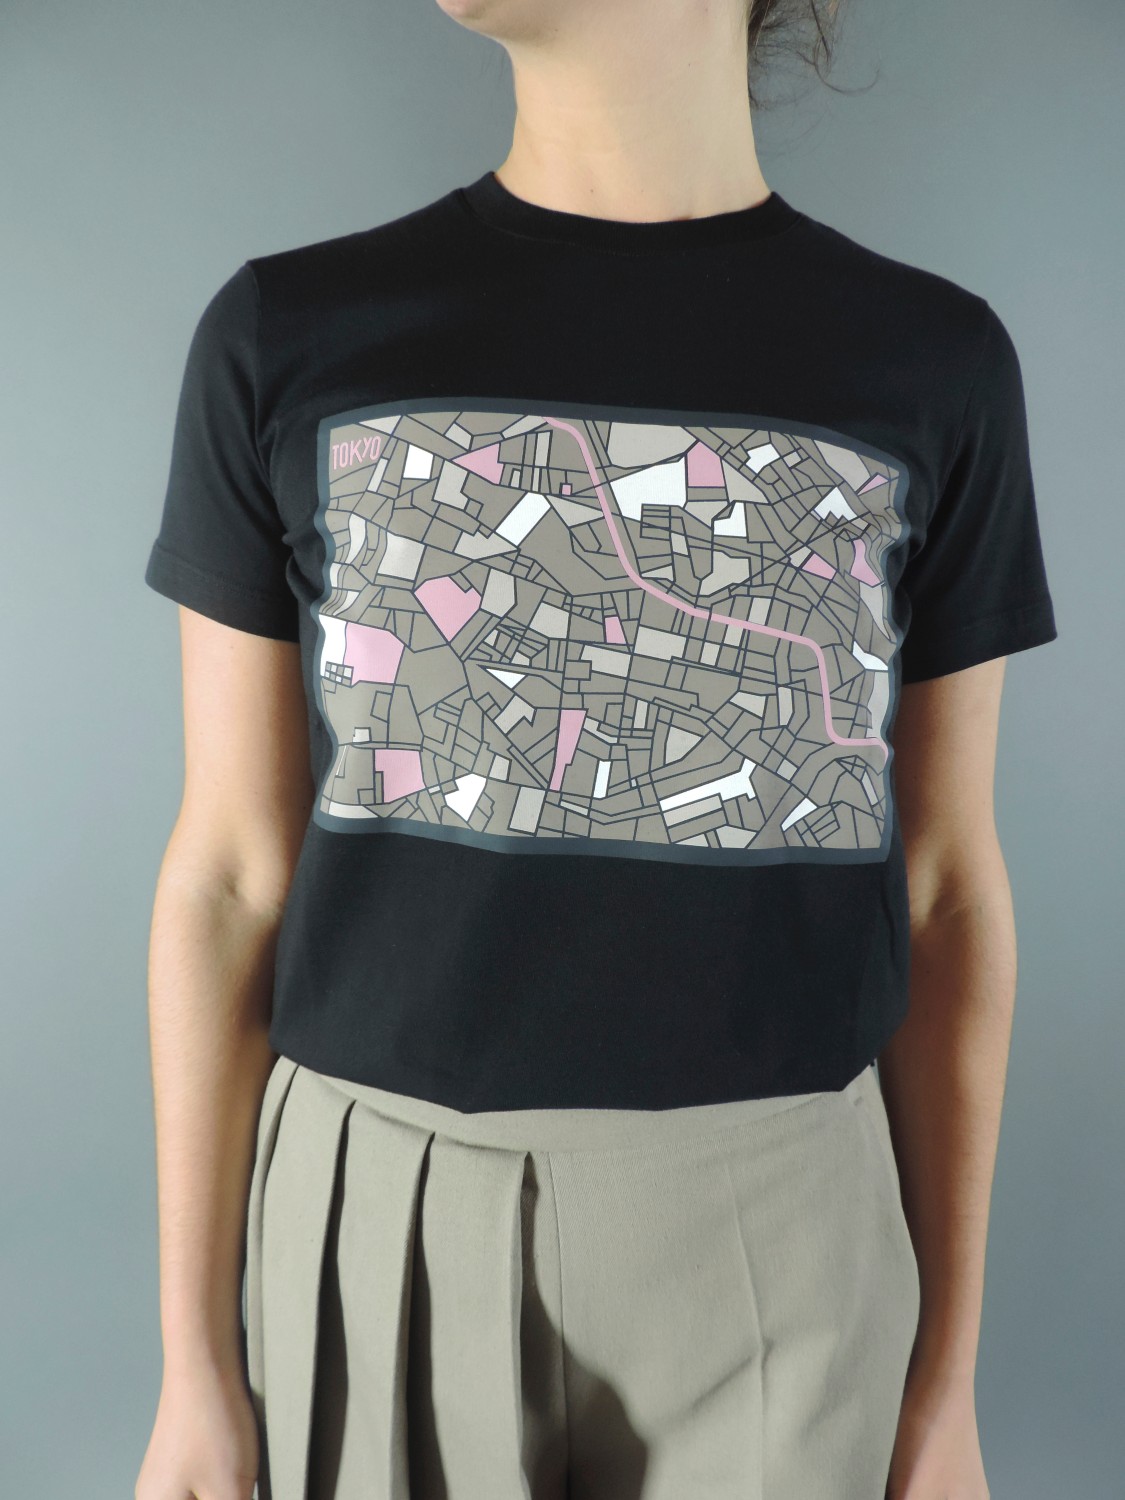 shop MSGM Saldi T-shirts: MSGM t-shirt girocollo nera con cartina di Tokyo sul davanti. number 618